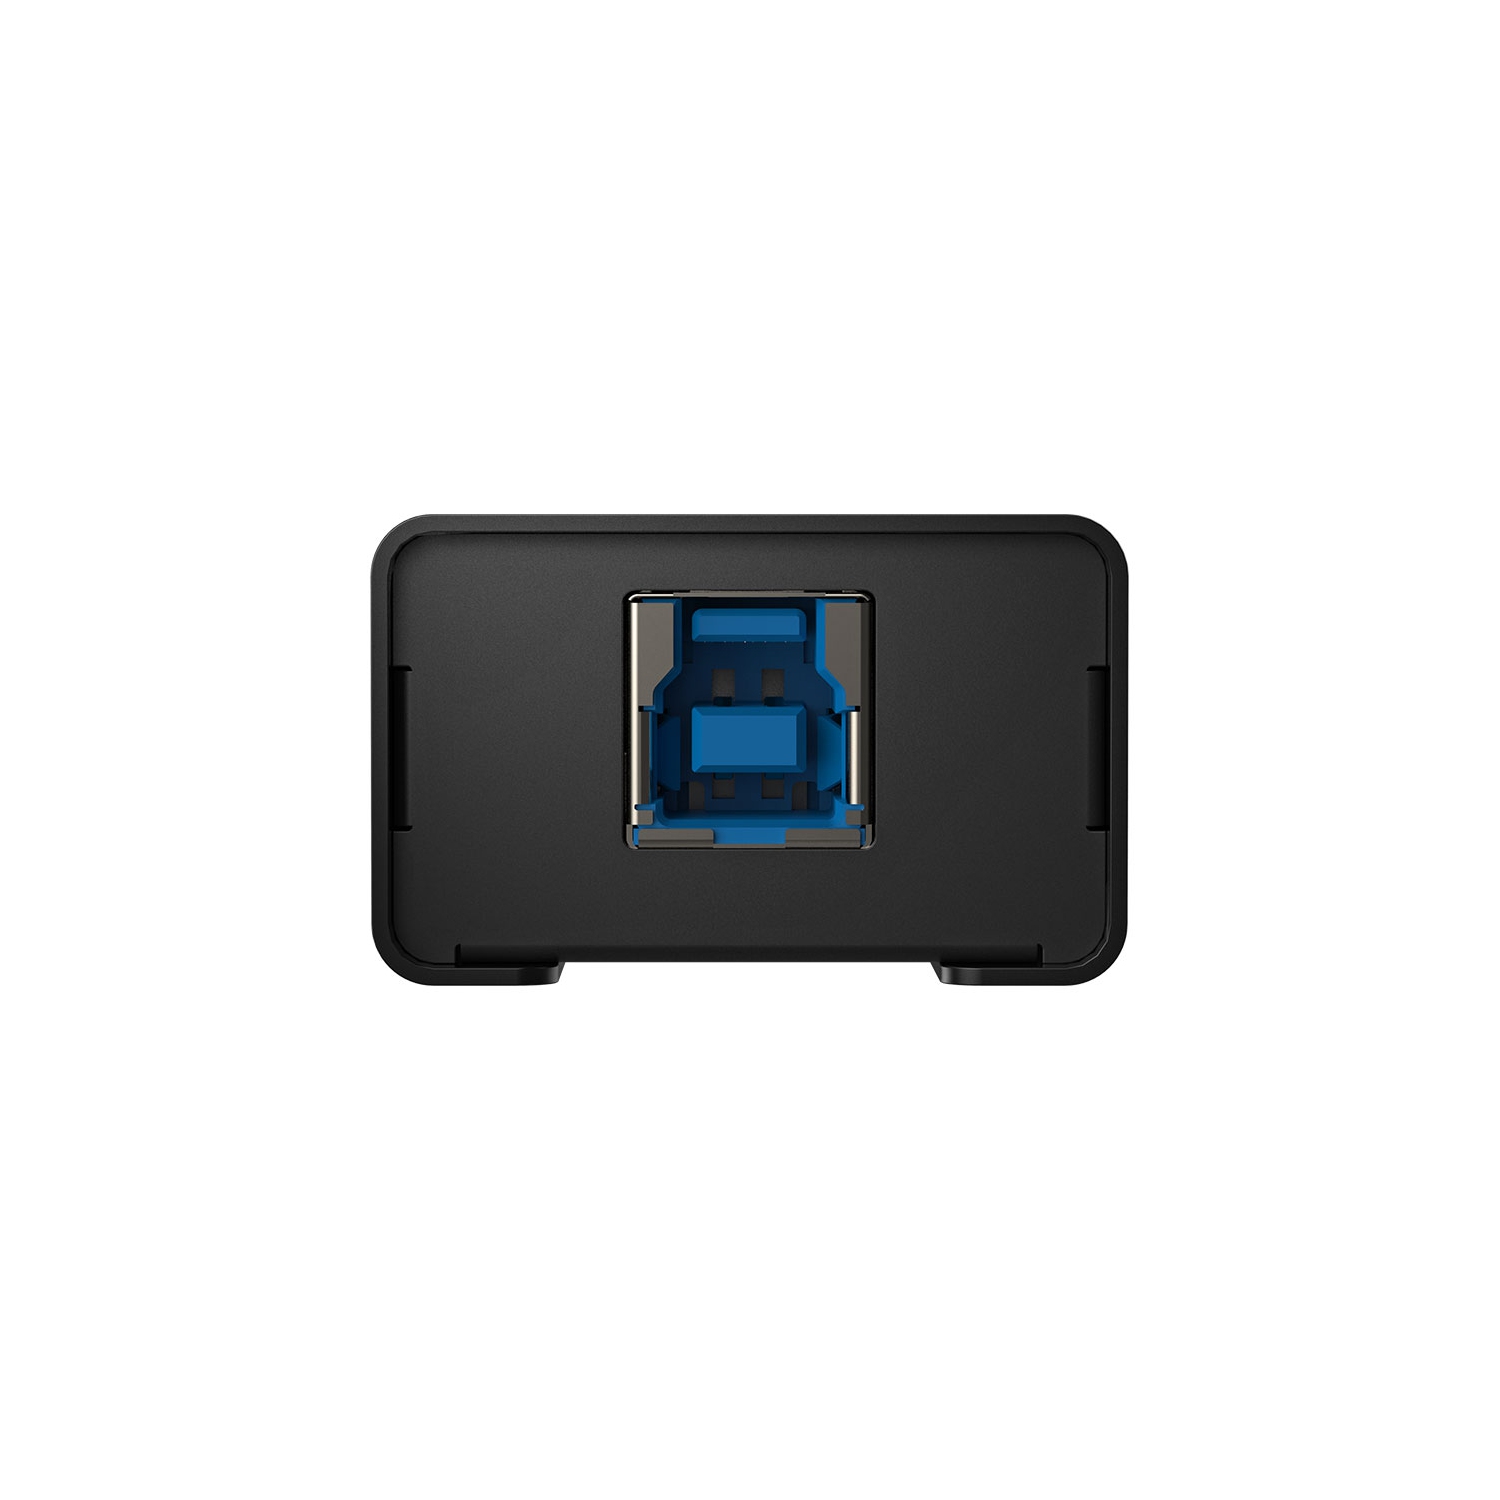 Roland UVC-01 USB Video Capture Interface | Best Buy Canada